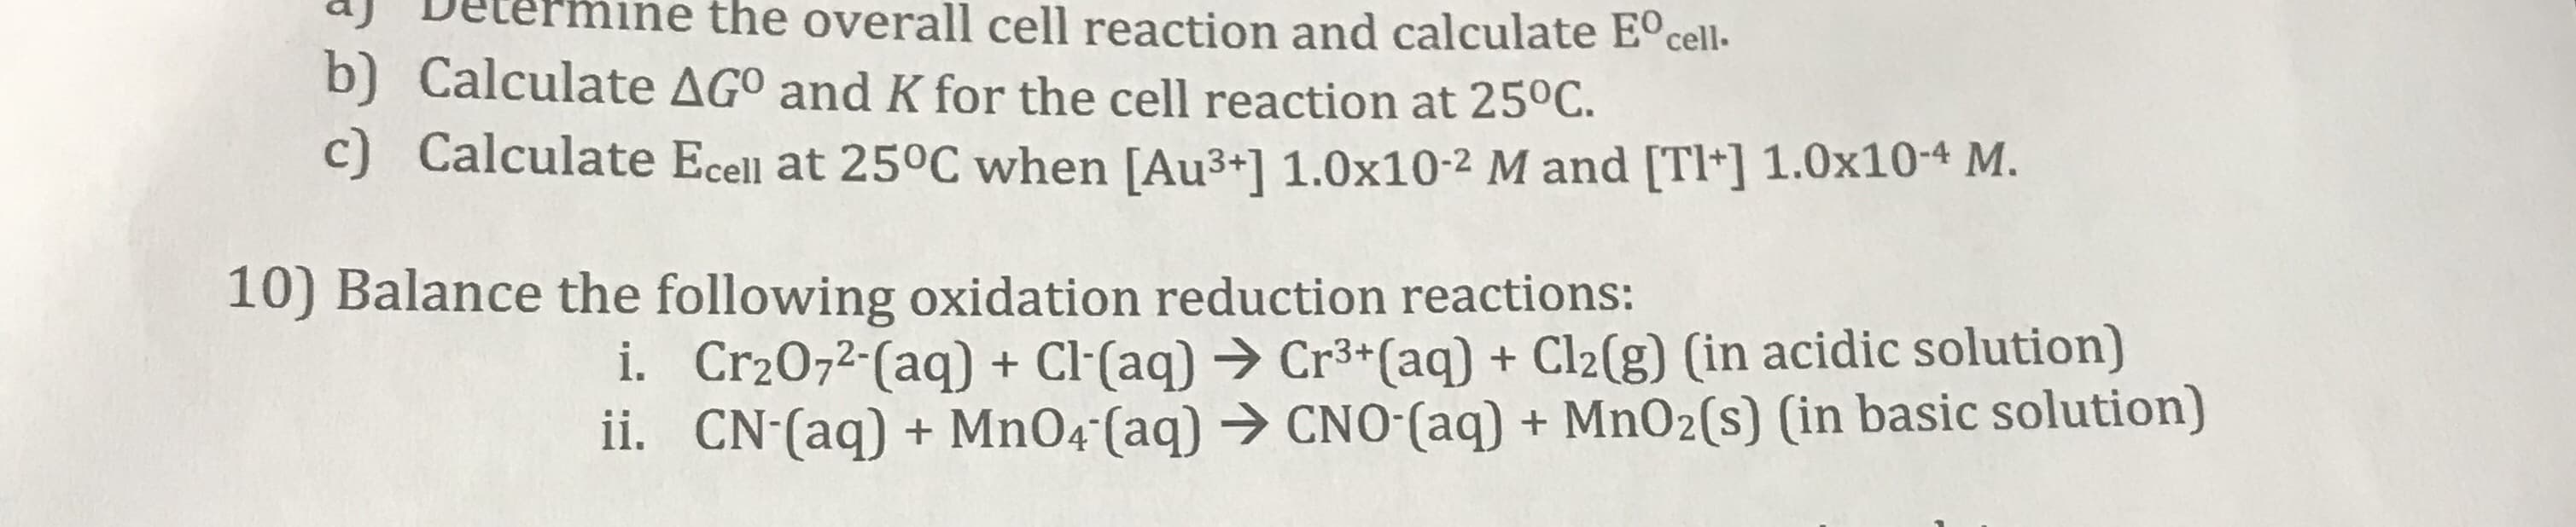 Balance the following oxidation reduction reactions:
i. Cr2O72-(aq) + Cl-(aq) → Cr3+(aq) + Cl2(g) (in acidic solution)
ii. CN-(aq) + MnO4 (aq) → CNO-(aq) + MnO2(s) (in basic solution)
